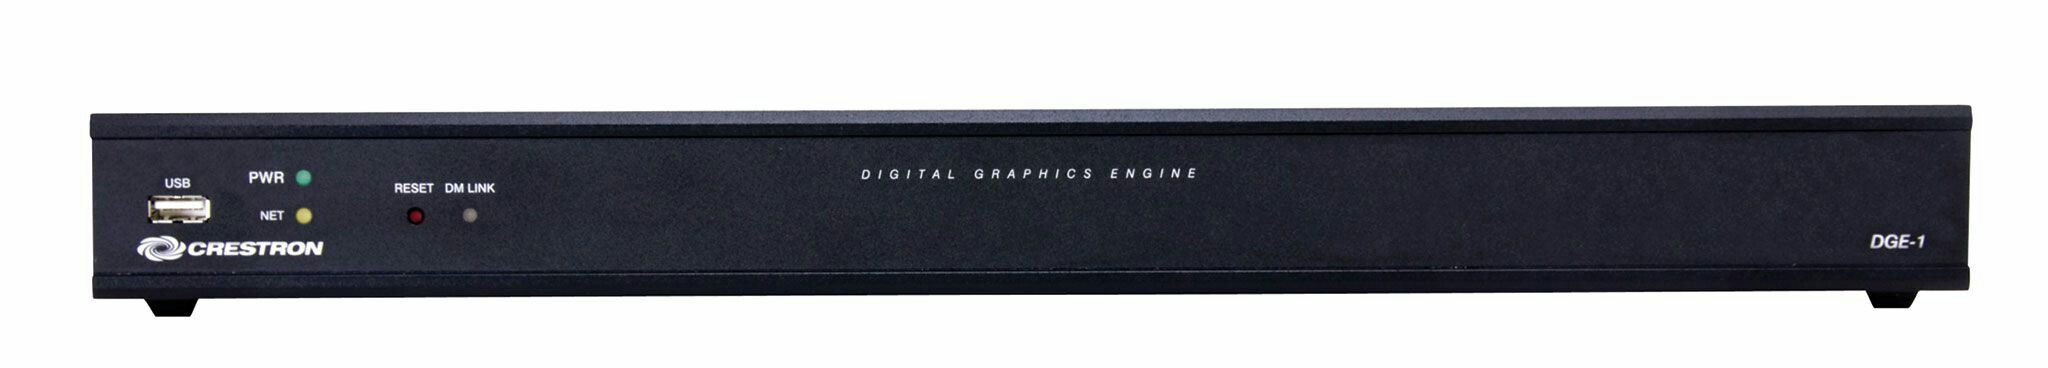 CRESTRON DGE-1 Digital Graphics Engine